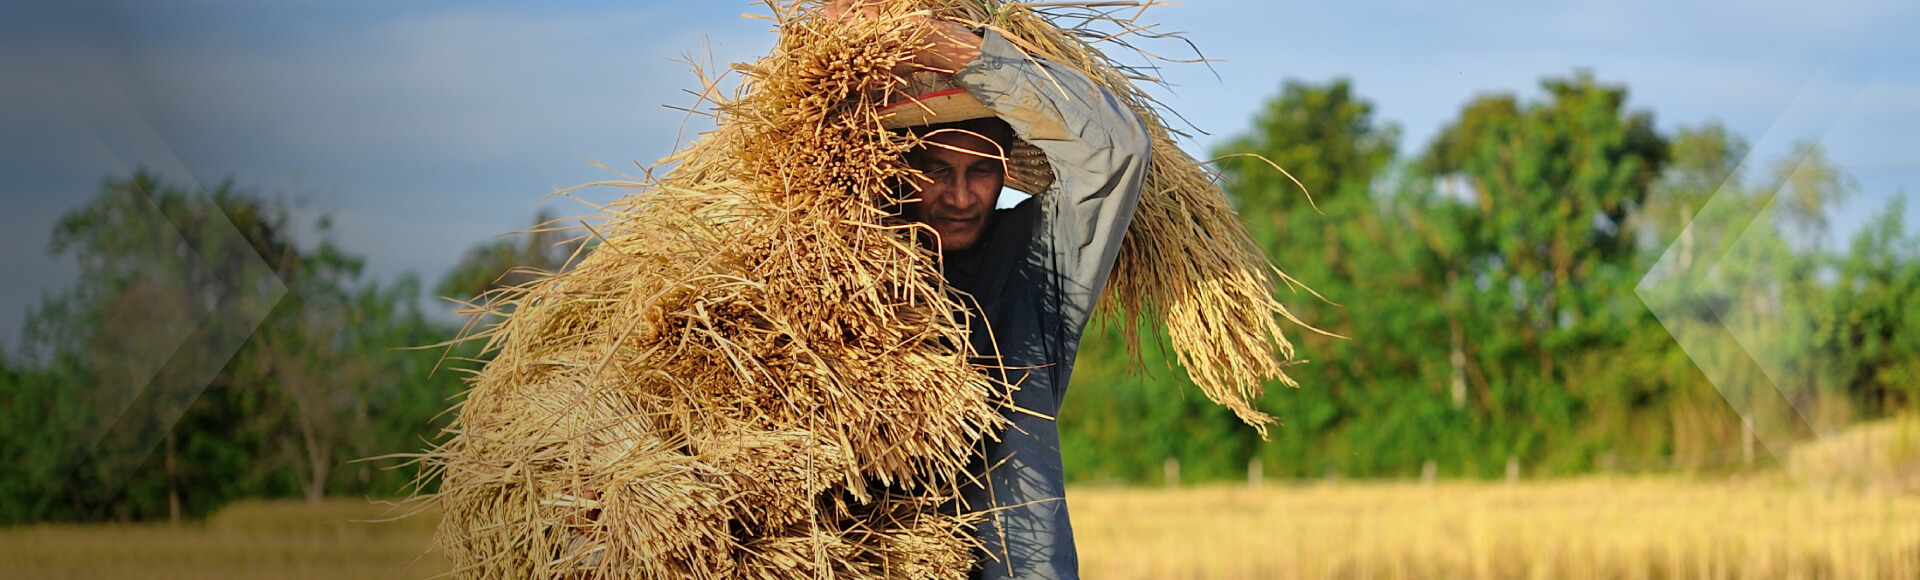 farmer harvesting rice